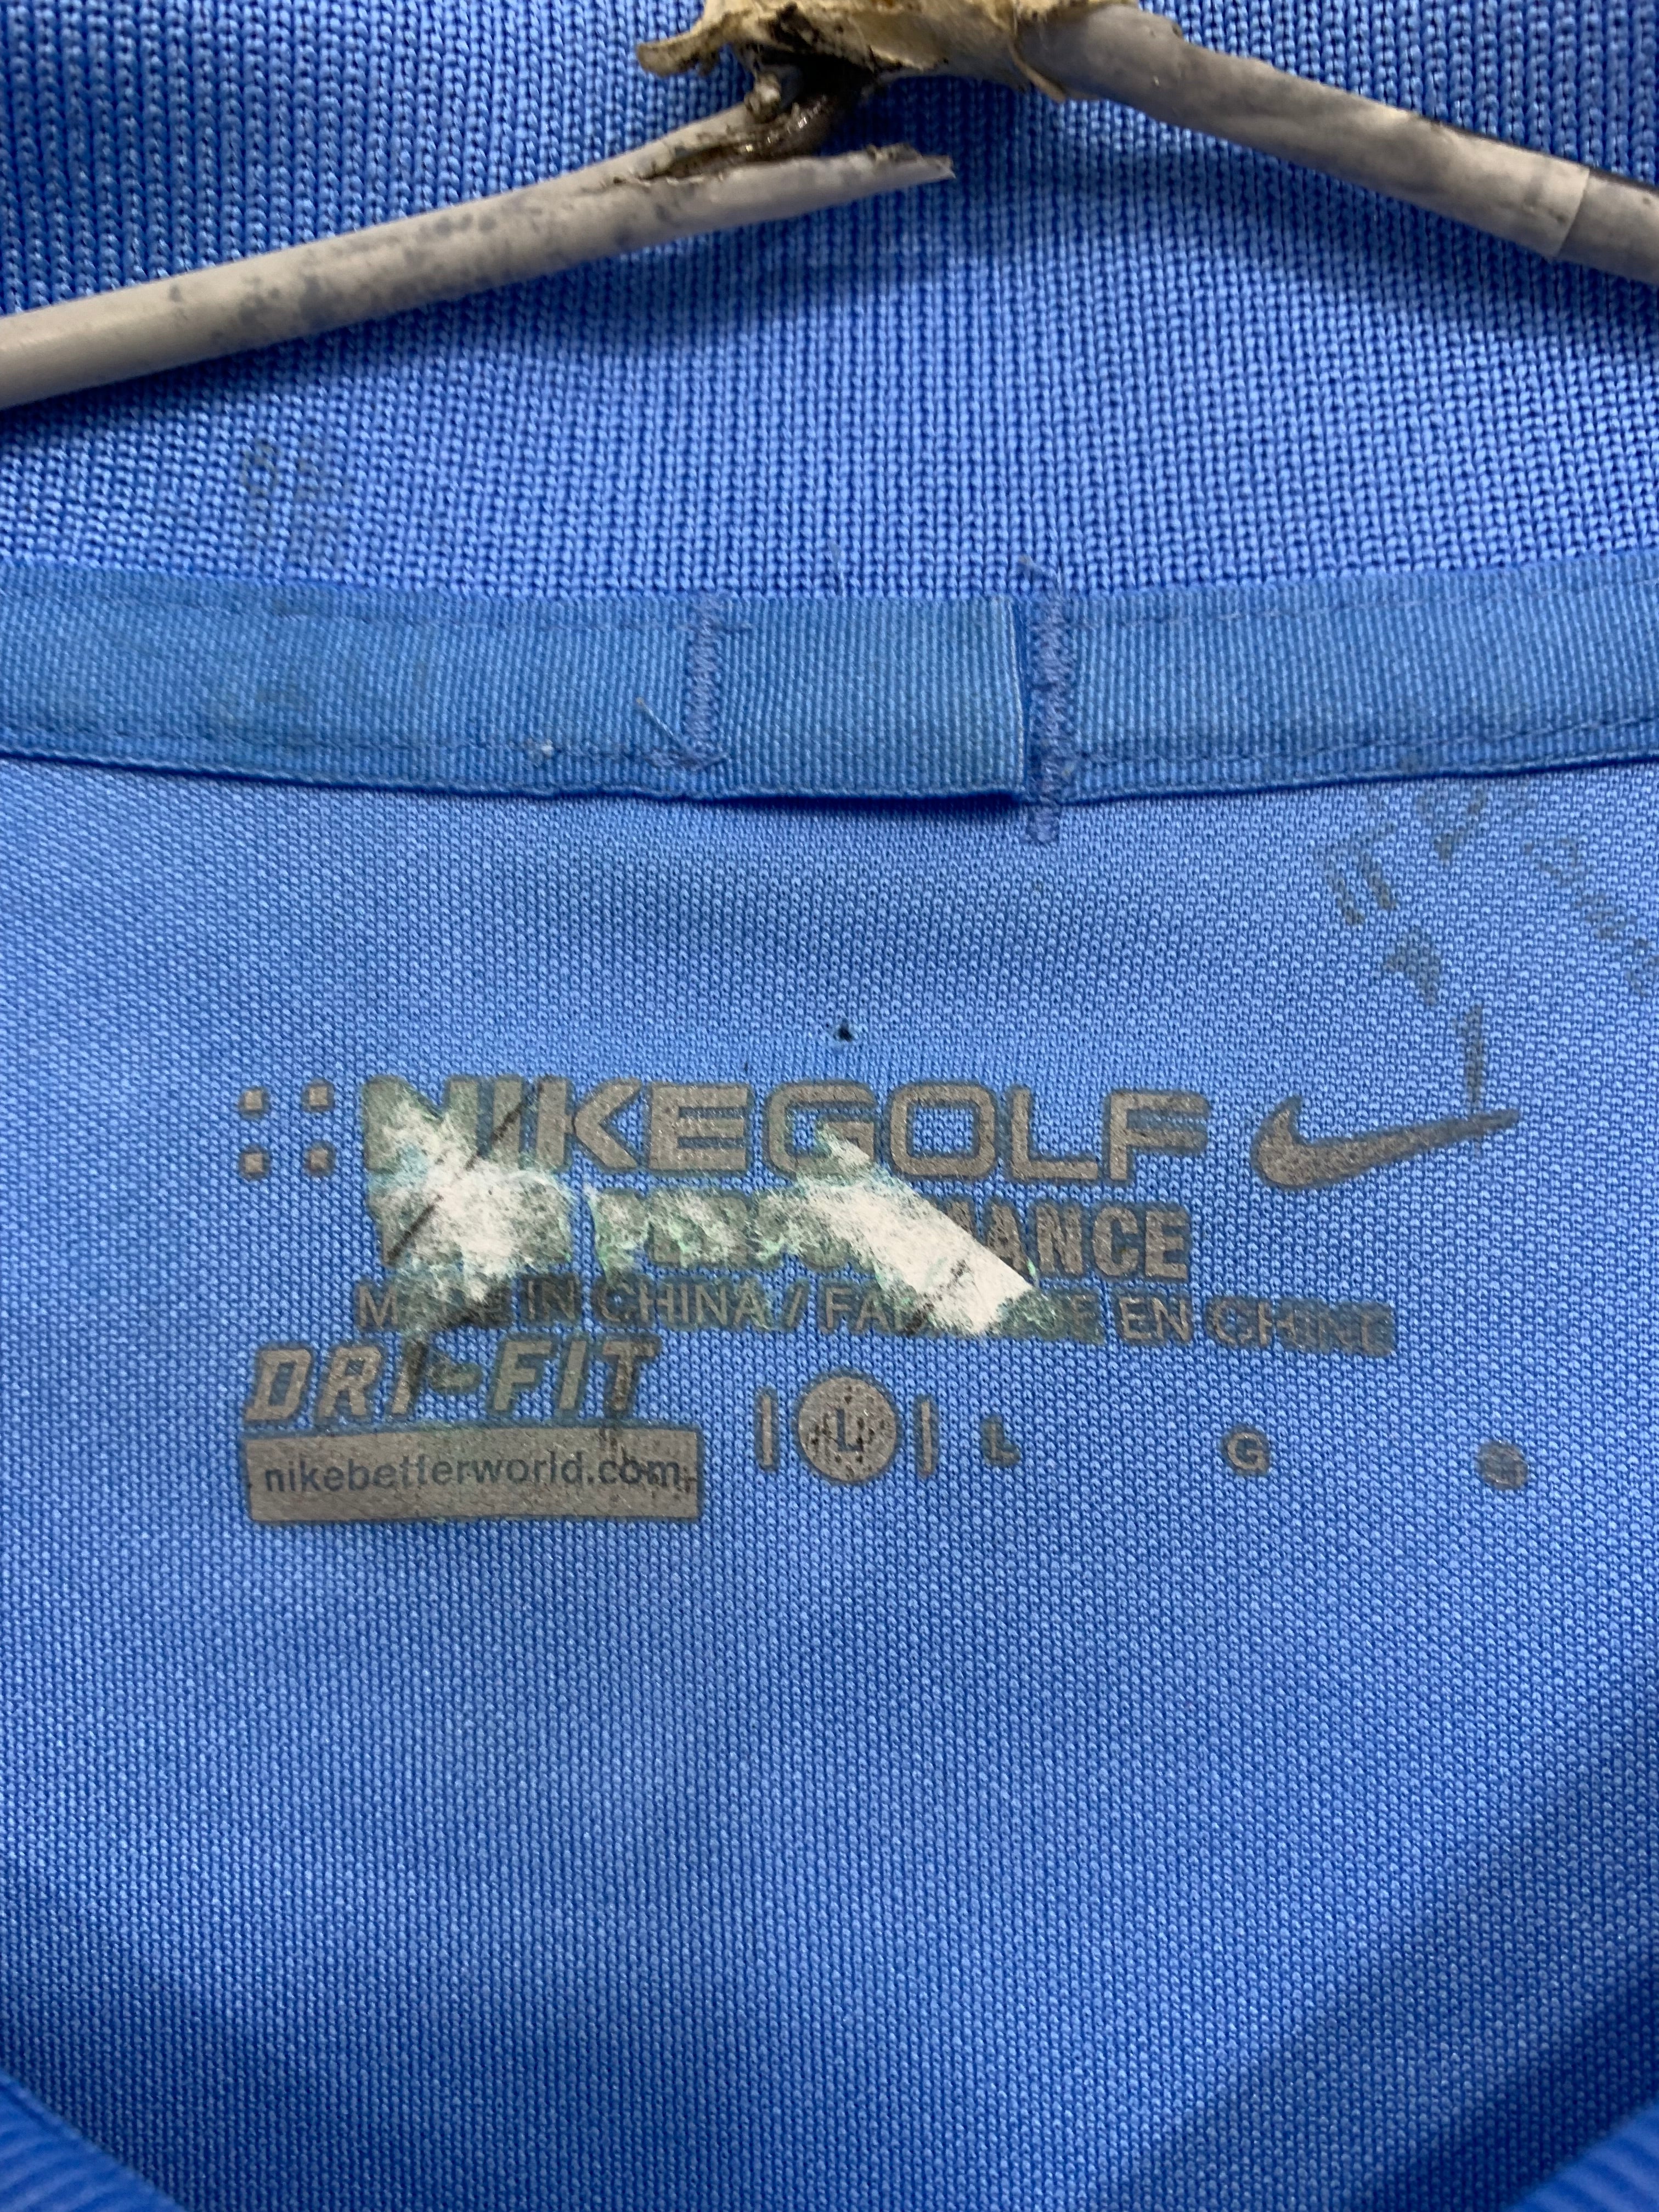 Nike Golf Branded Original For Sports Golf Polo Men T Shirt